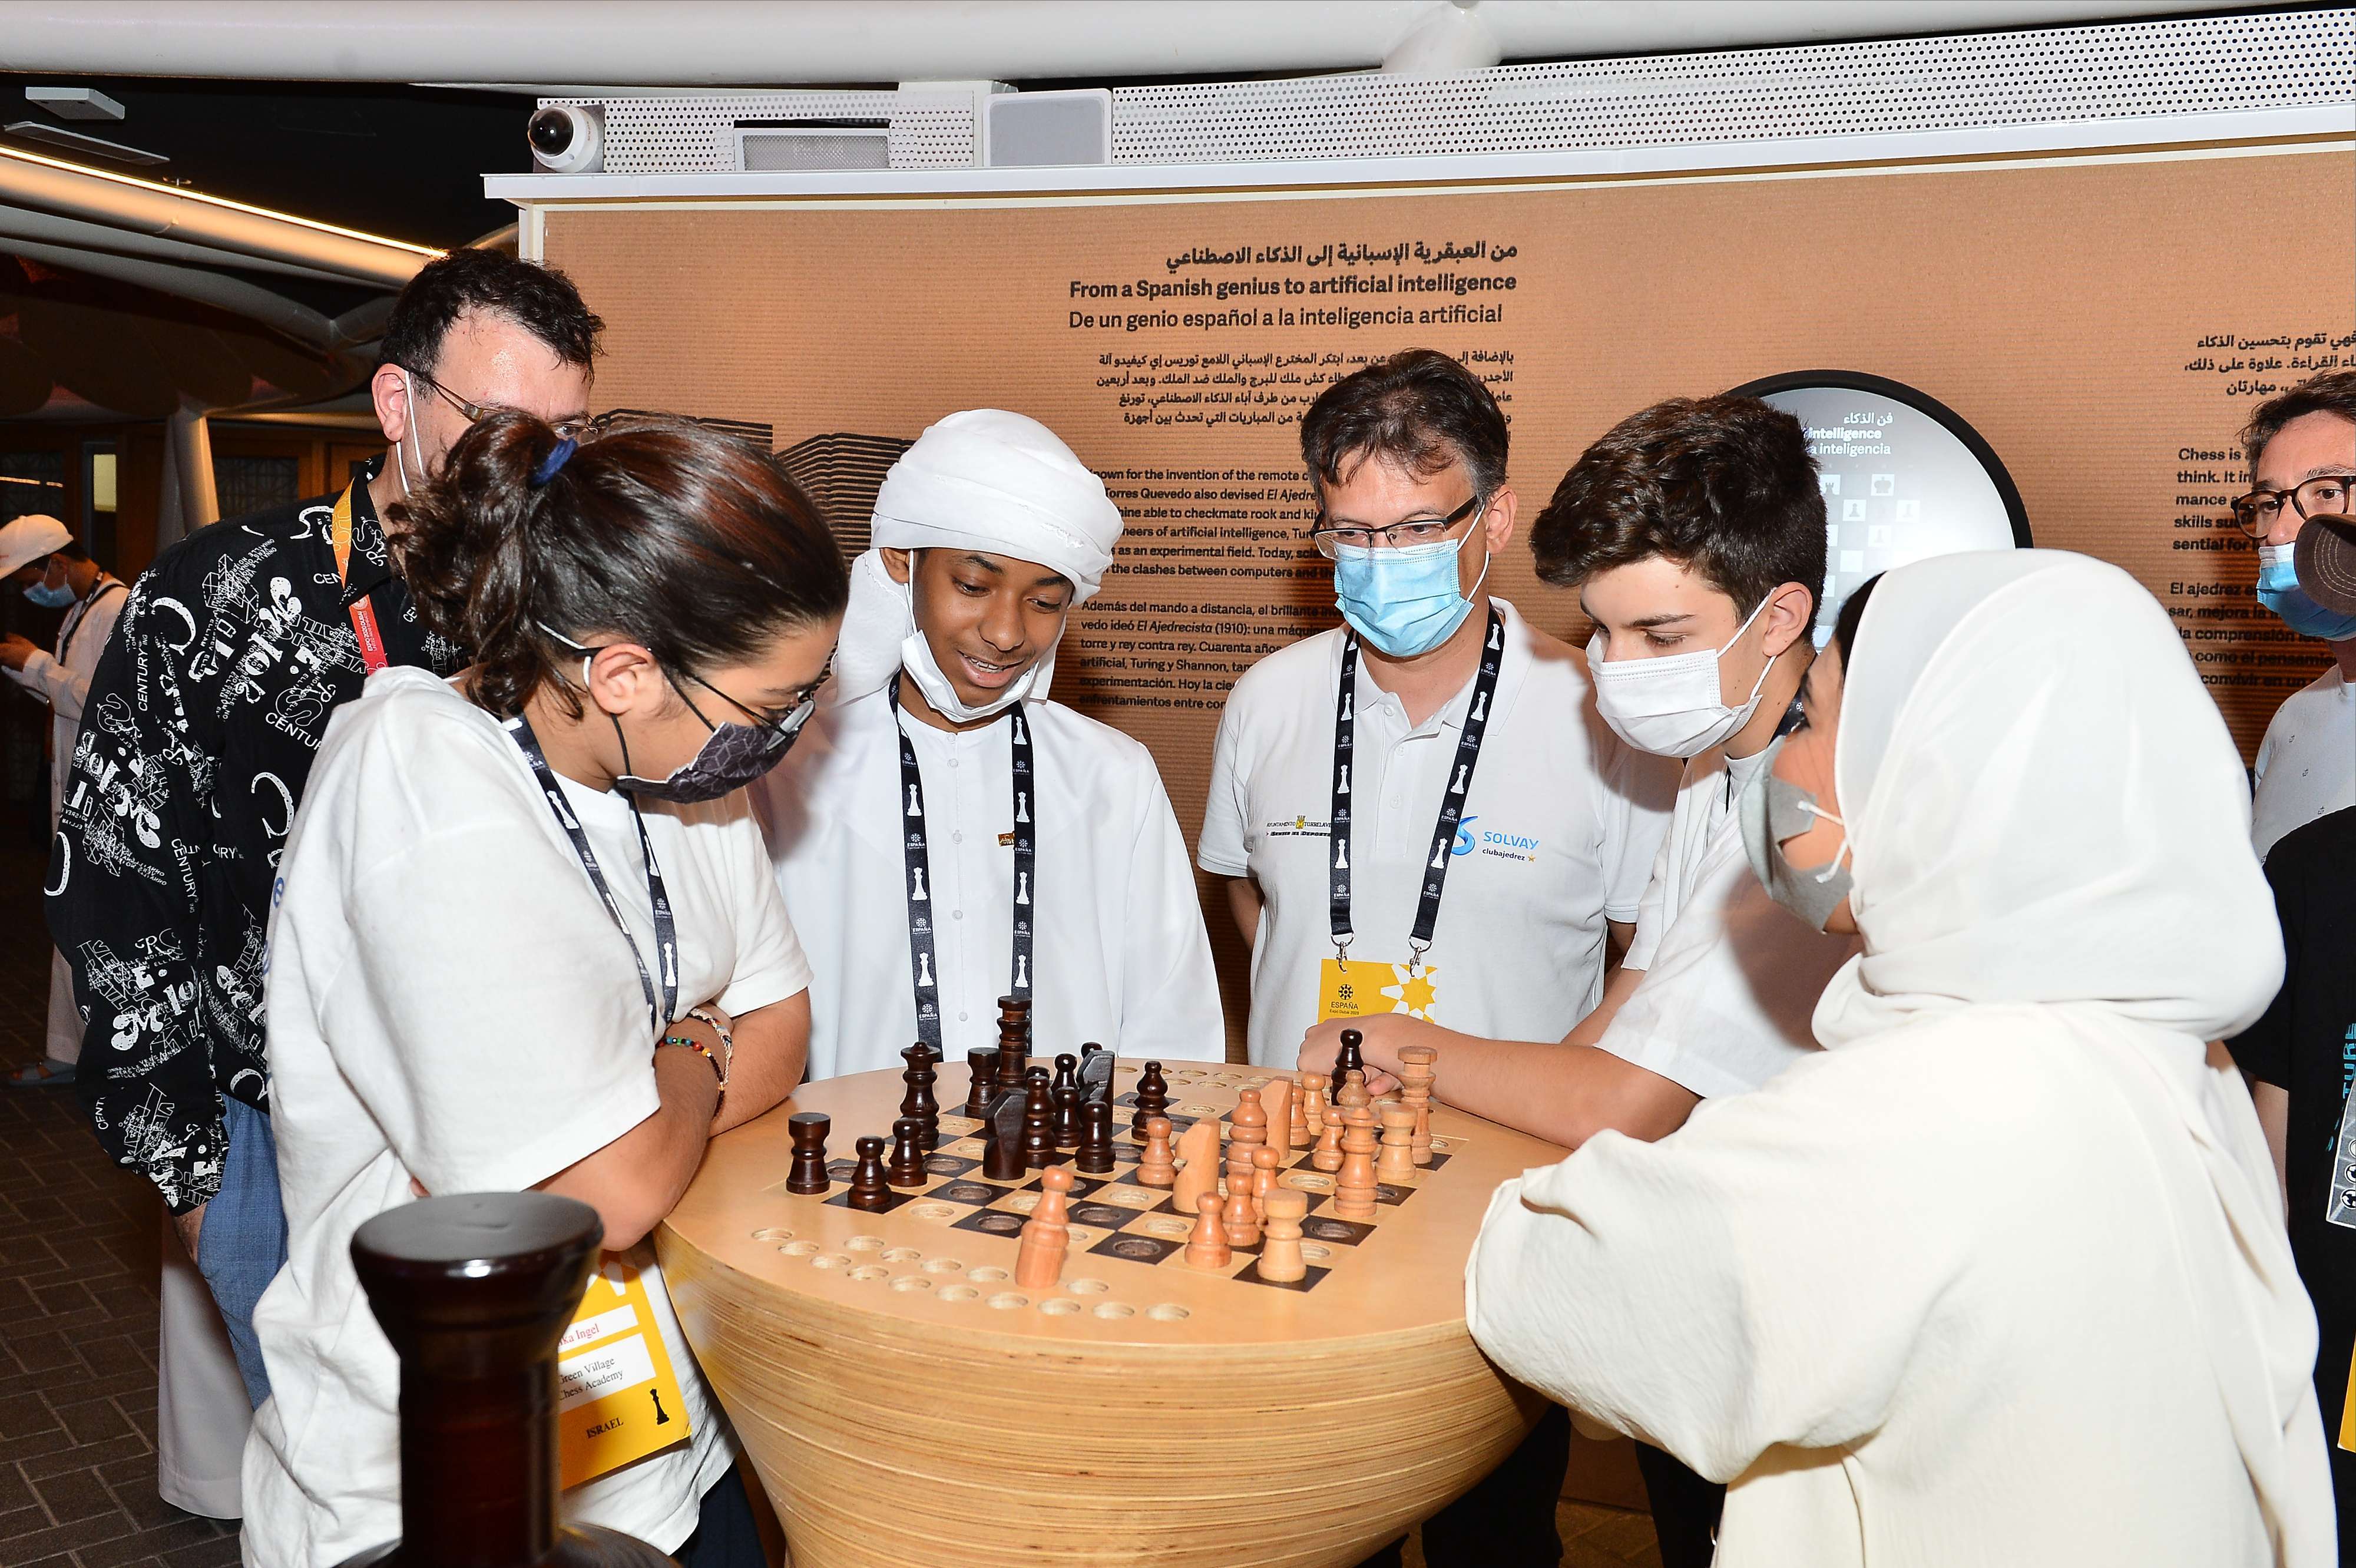 Emiratíes e israelíes juegan al ajedrez en el Pabellón de España. (@ExpoSpain2020)